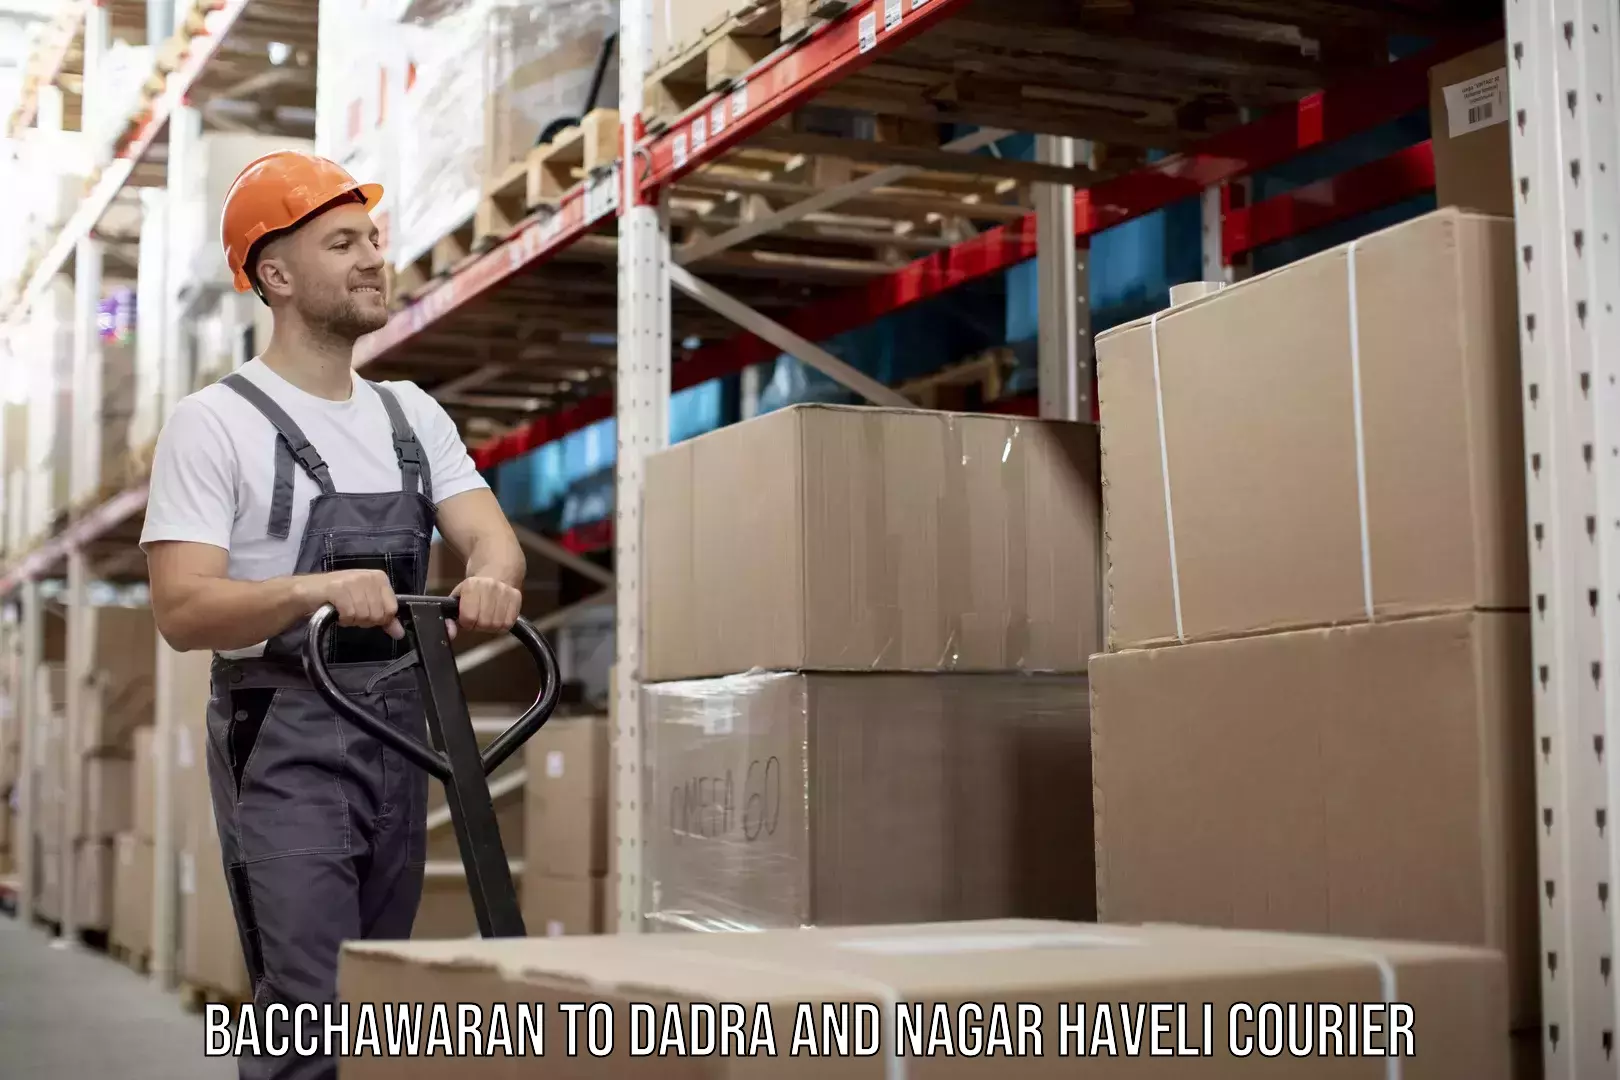 Courier service innovation Bacchawaran to Dadra and Nagar Haveli